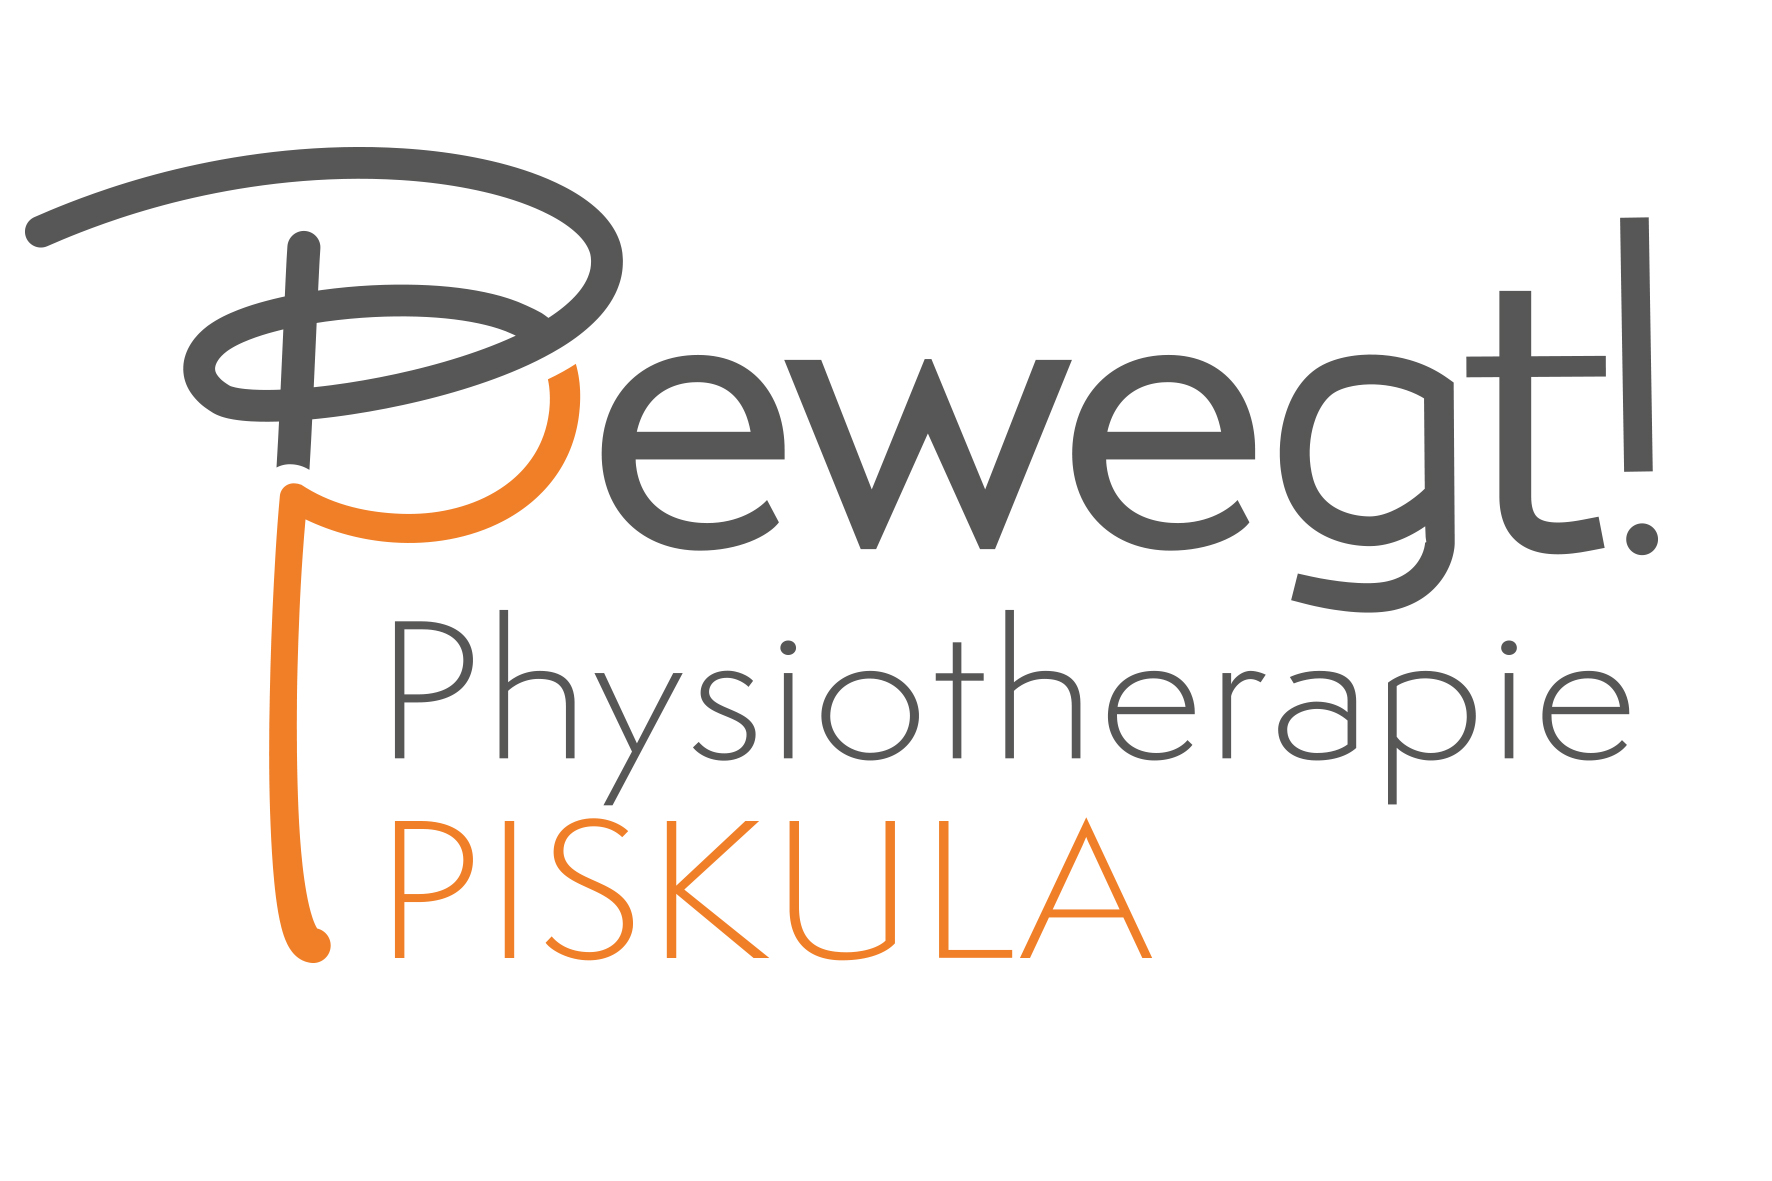 Physiotherapie Piskula